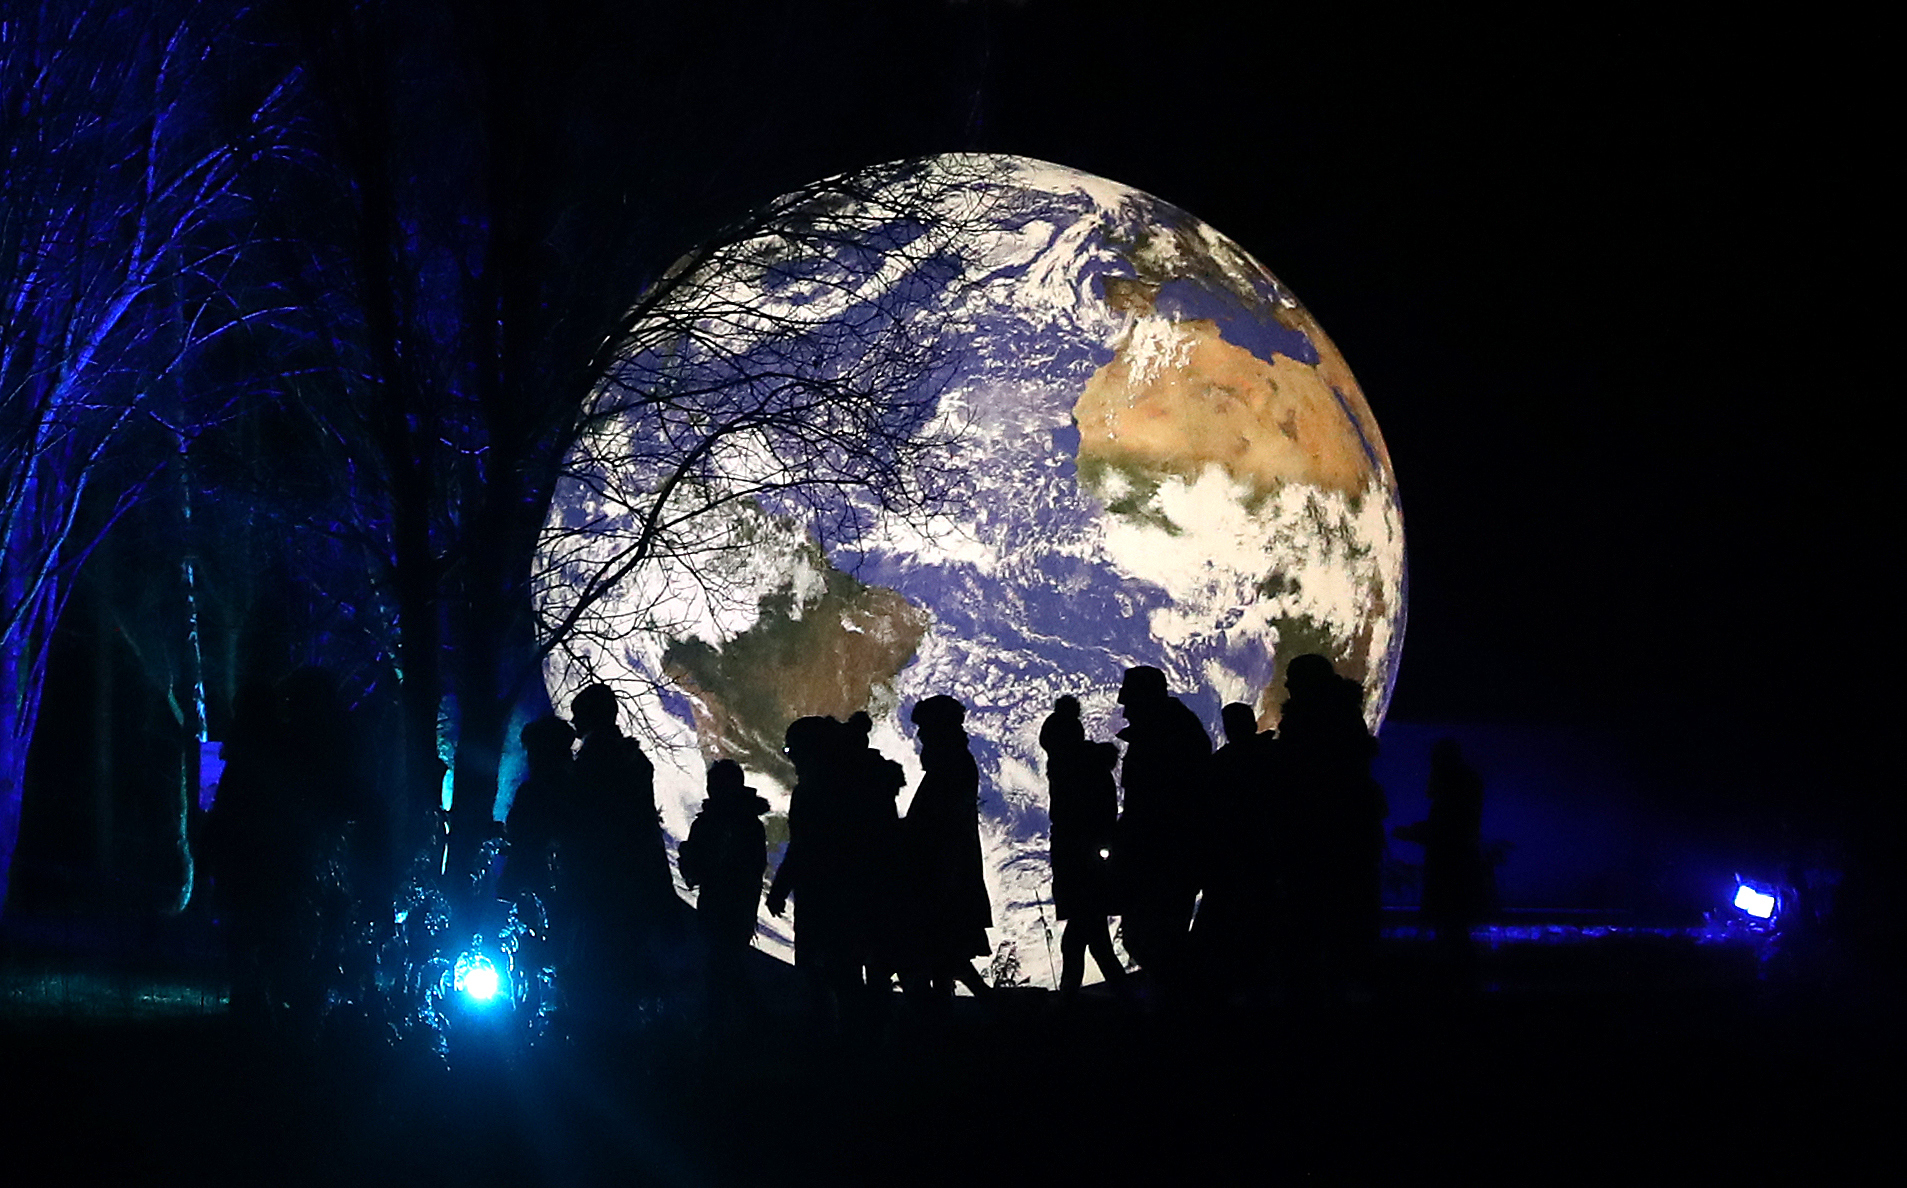 Visitors walks past the art installation Gaia, a seven-metre scale model of Earth created by artist Luke Jerram.